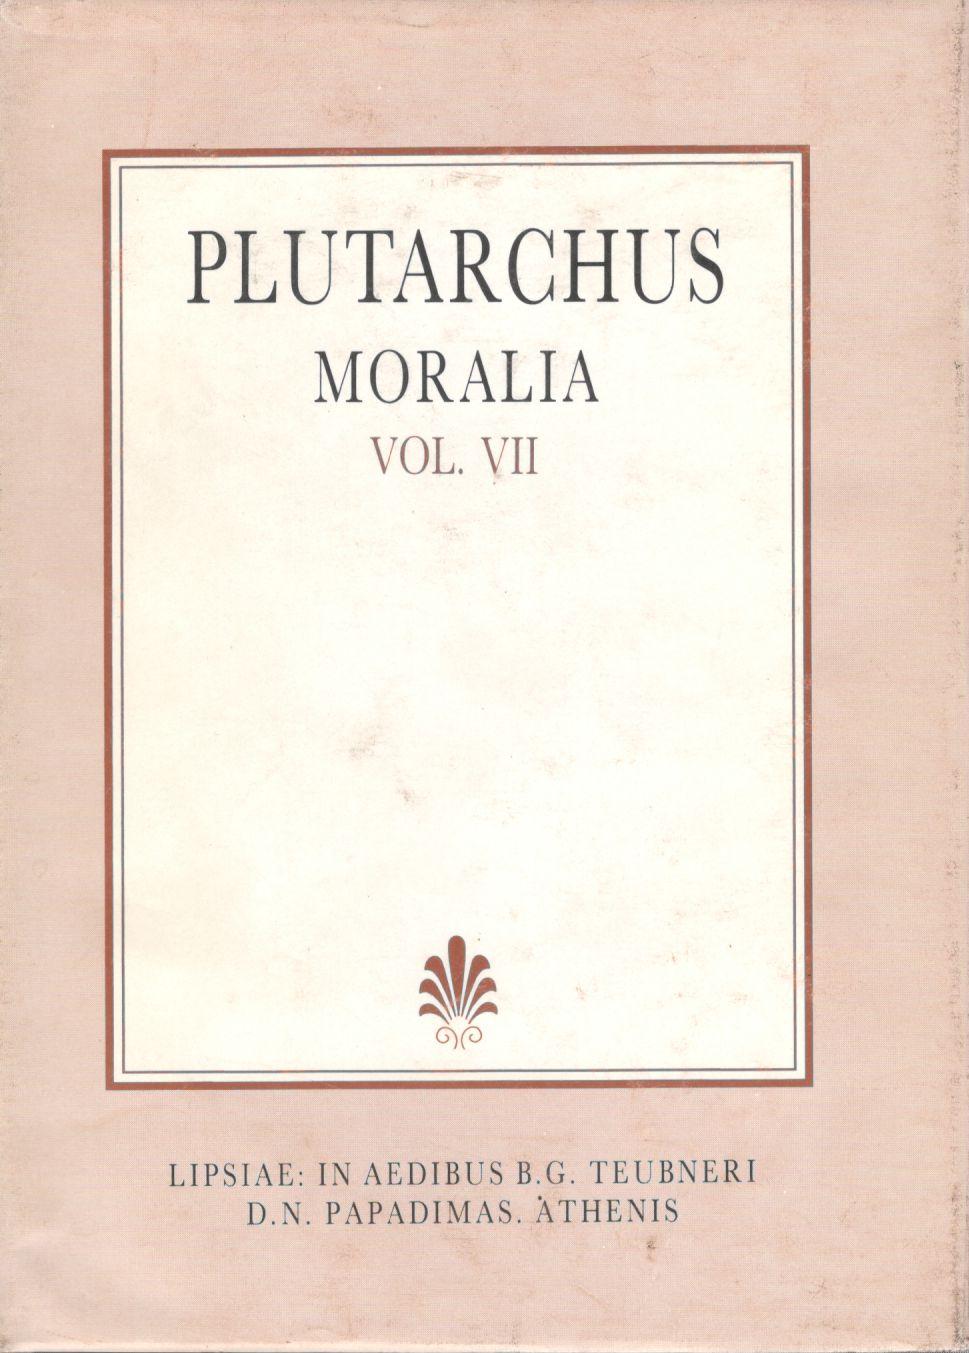 Plutarchi, Moralia, Vol. VII, [Πλουτάρχου, Ηθικά, τ. Ζ